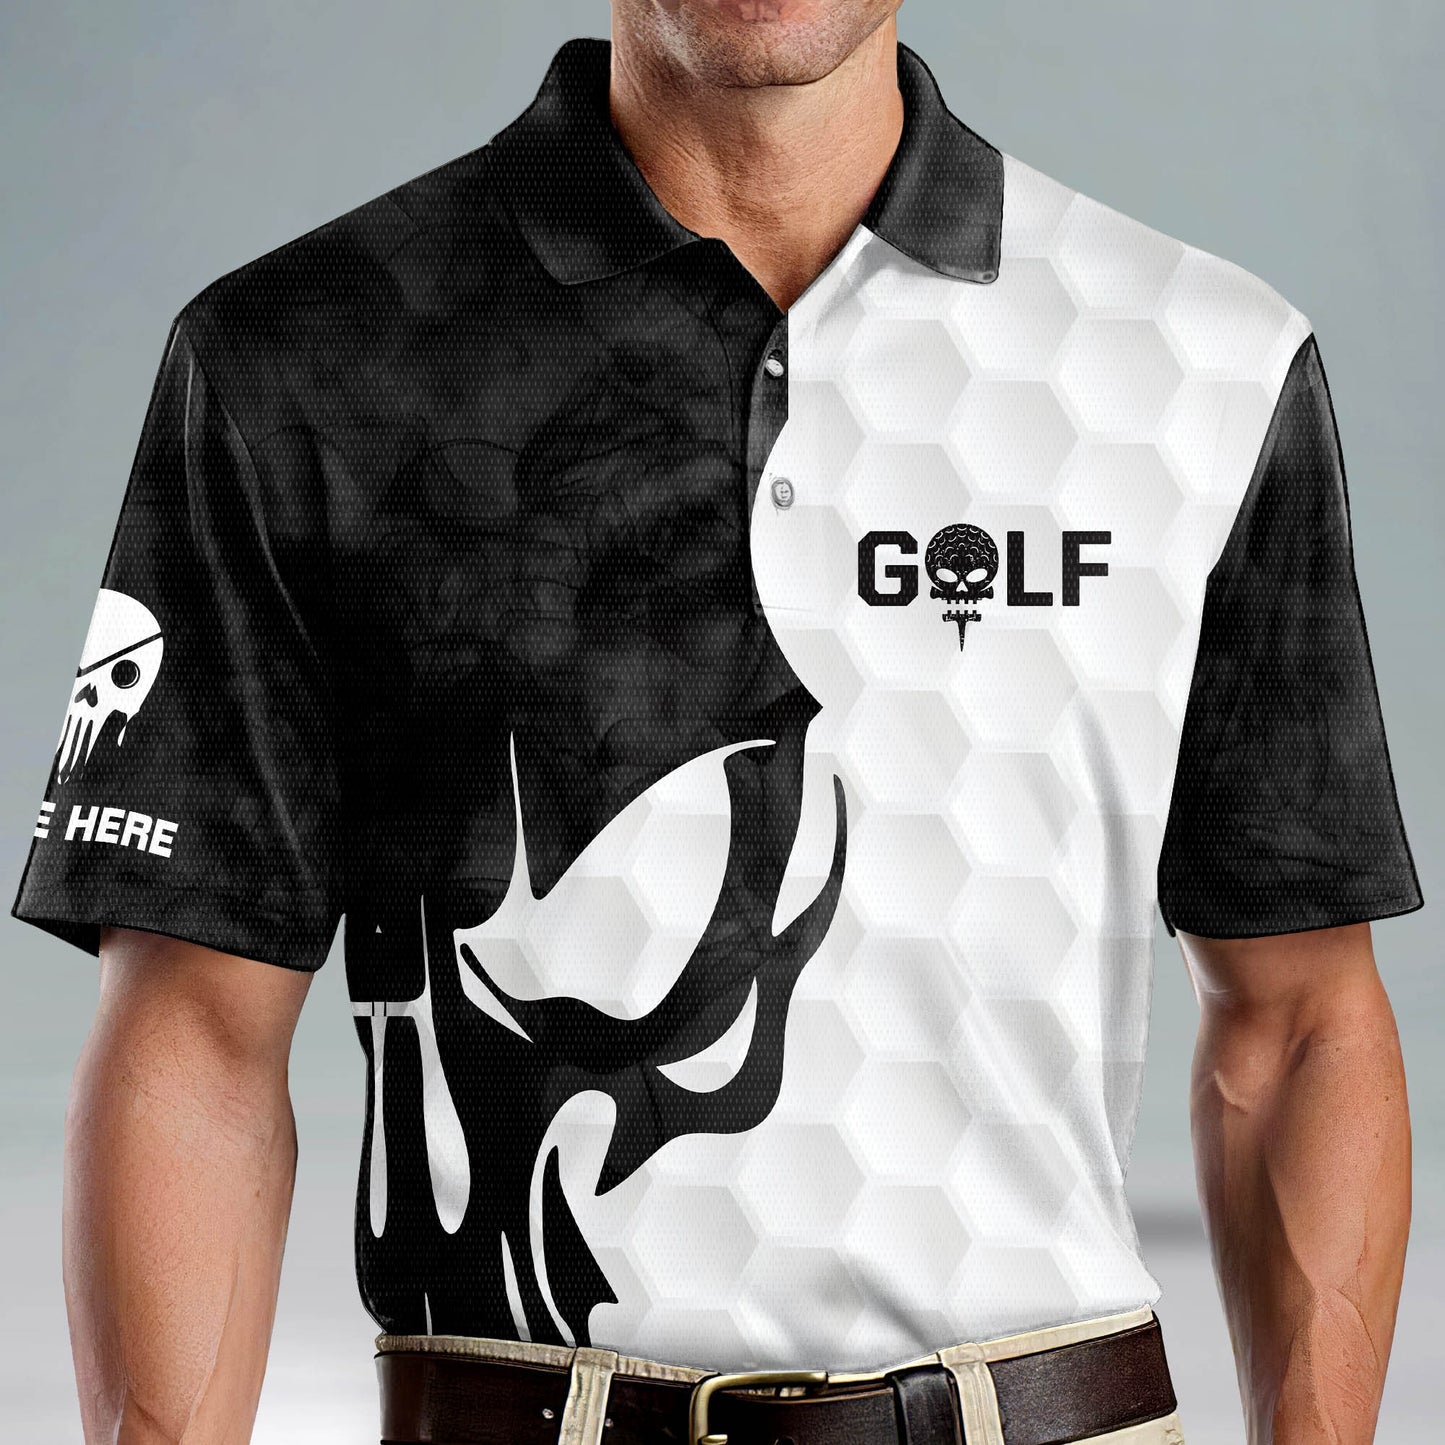 If I Die Bury Me With My Golf Club Golf Polo Shirt GM0200